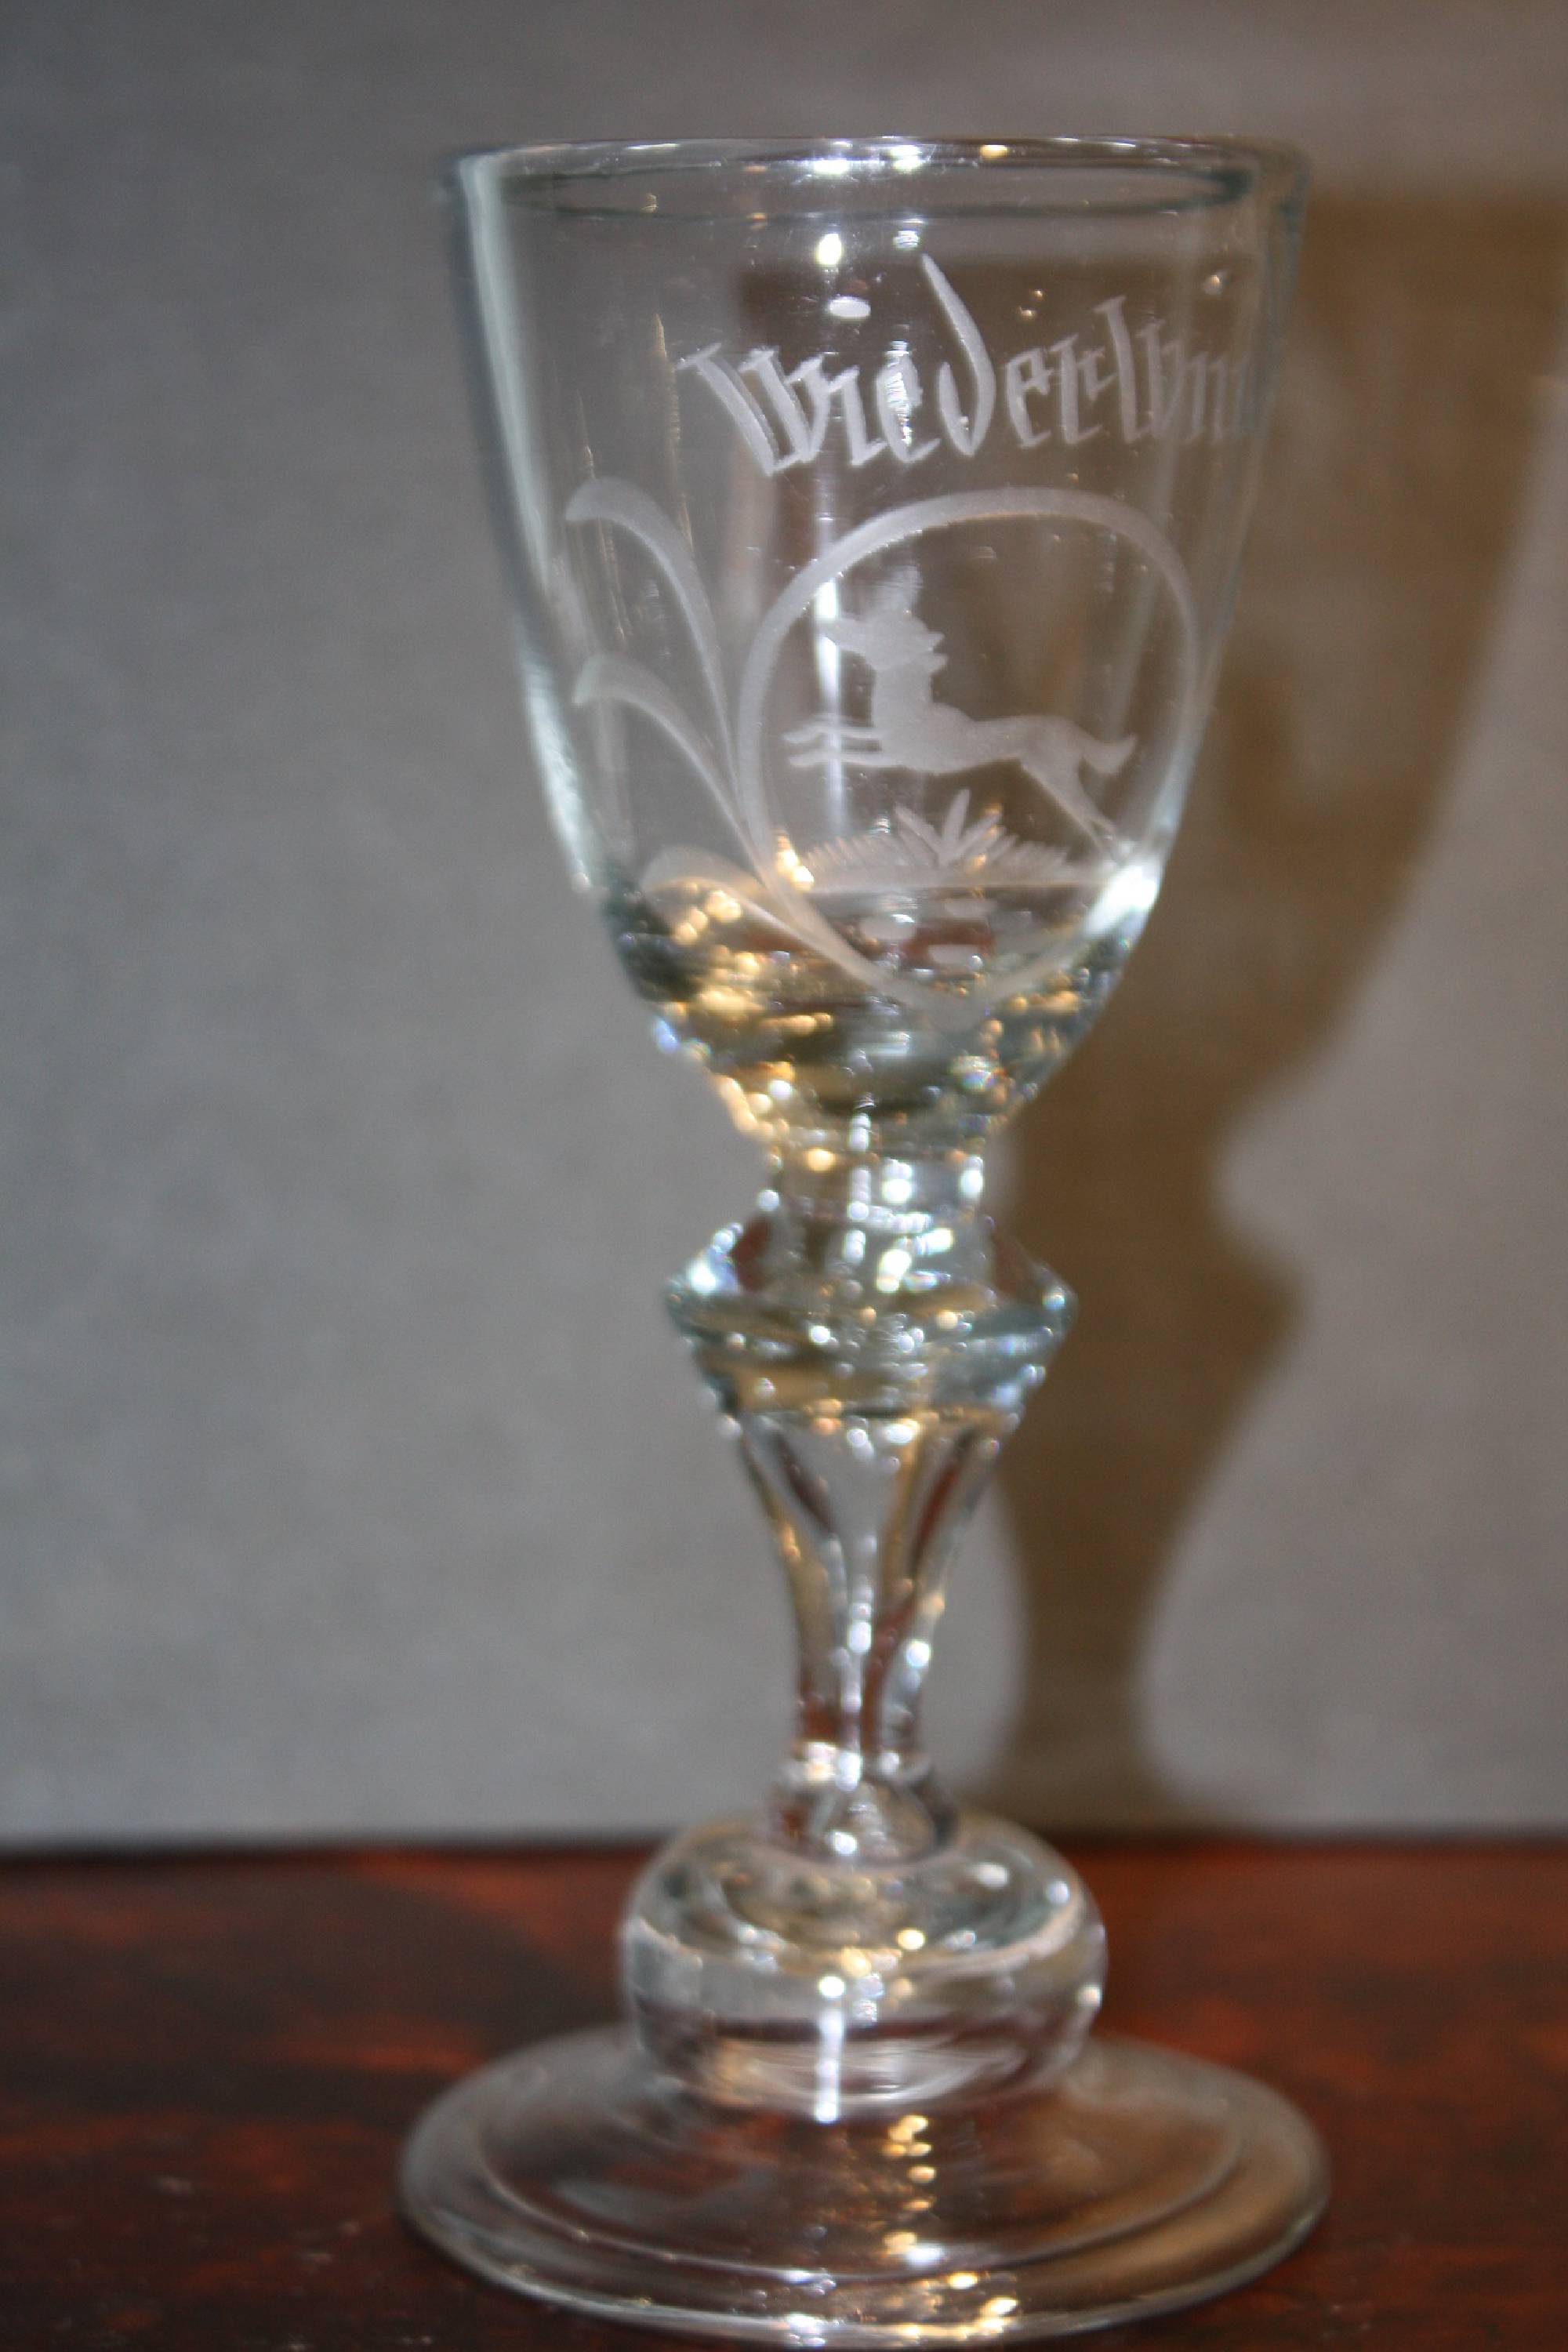 Antique 18th century 'lauenstein' engraved wine glass with inscription